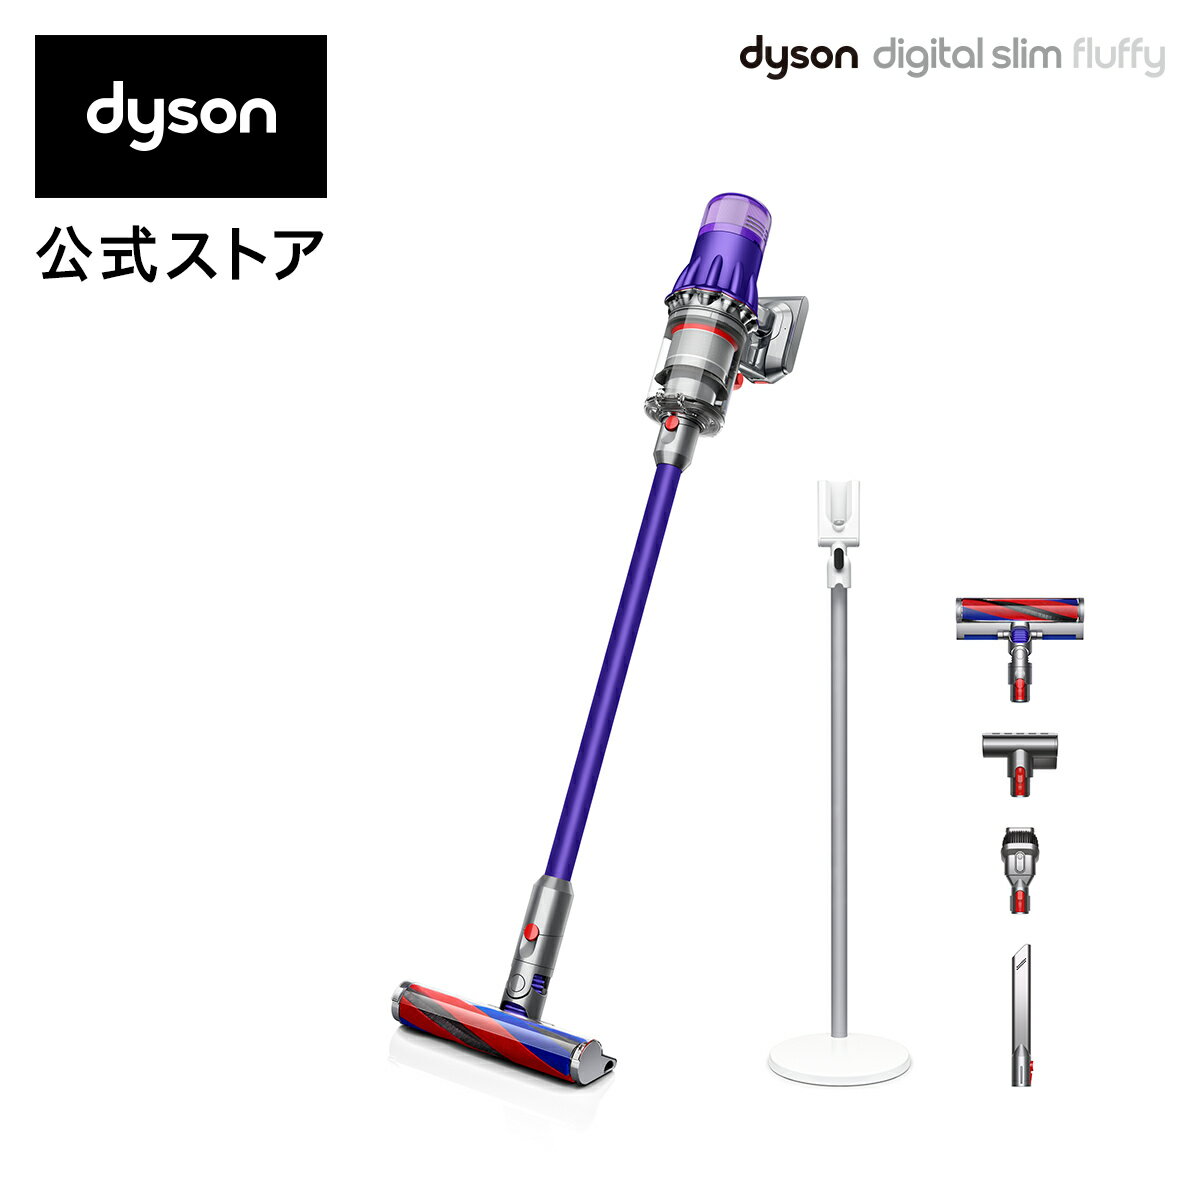  6 22V _C\ Dyson Digital Slim Fluffy TCN R[hX|@ dyson SV18FF 2020NŐVf